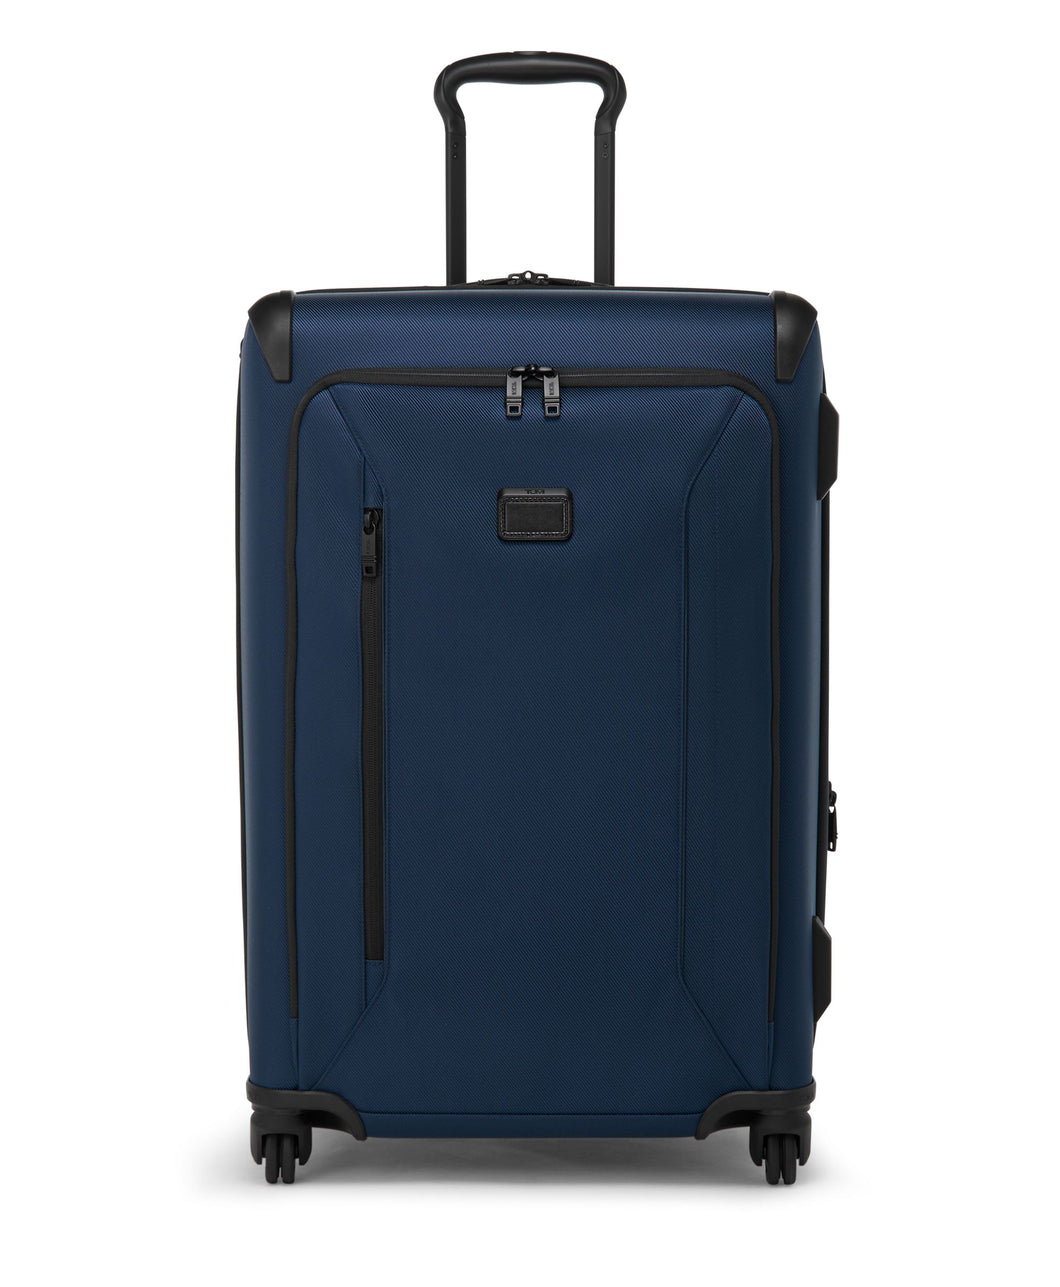 AEROTOUR Short Trip Expandable 4 Wheeled Packing Case